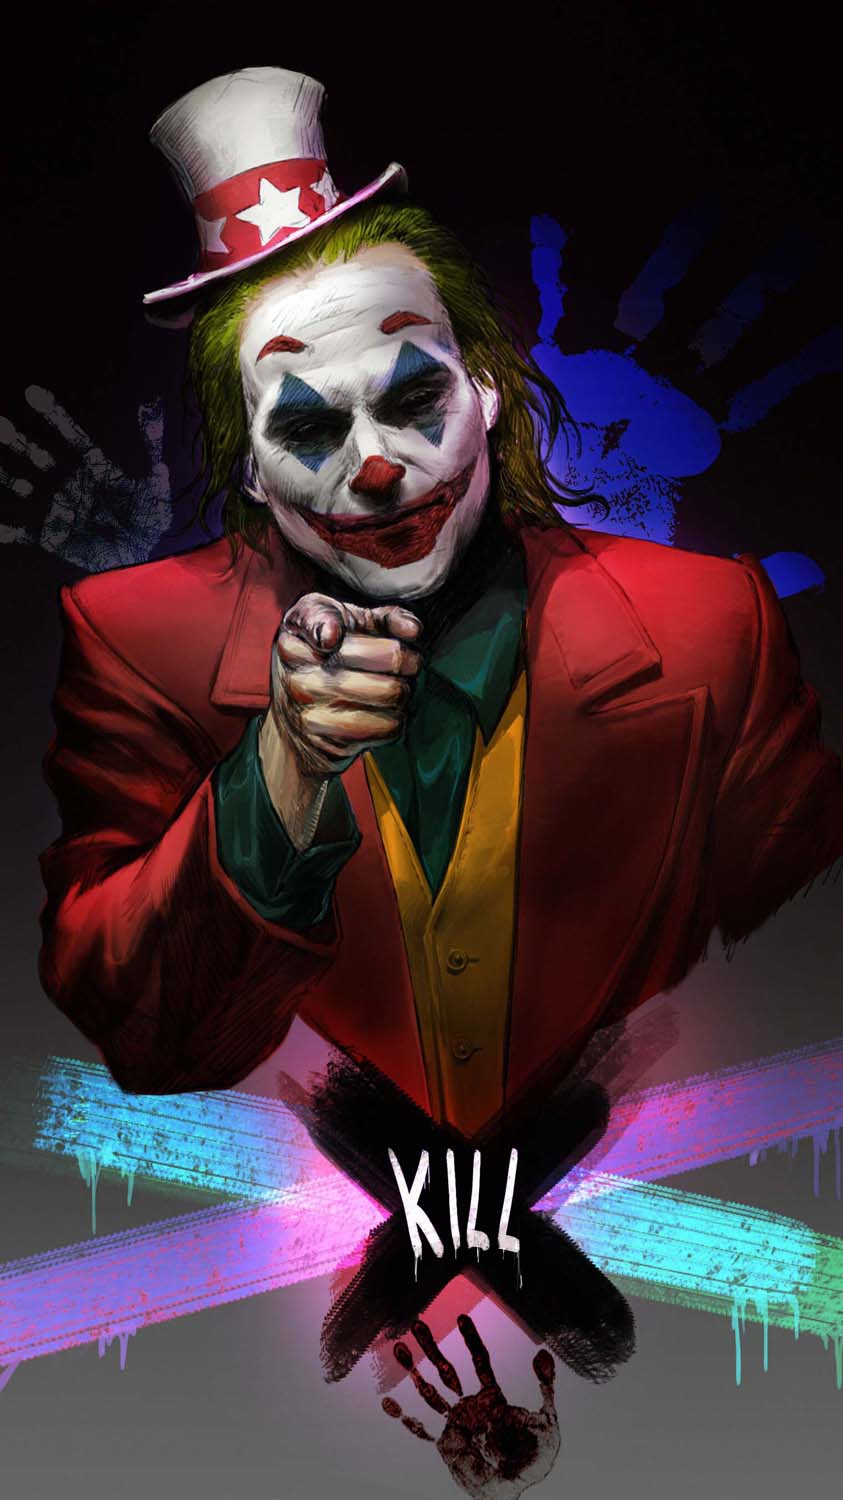  Joker iPhone Wallpaper Full Ultra 4k HD Download Free Free Download